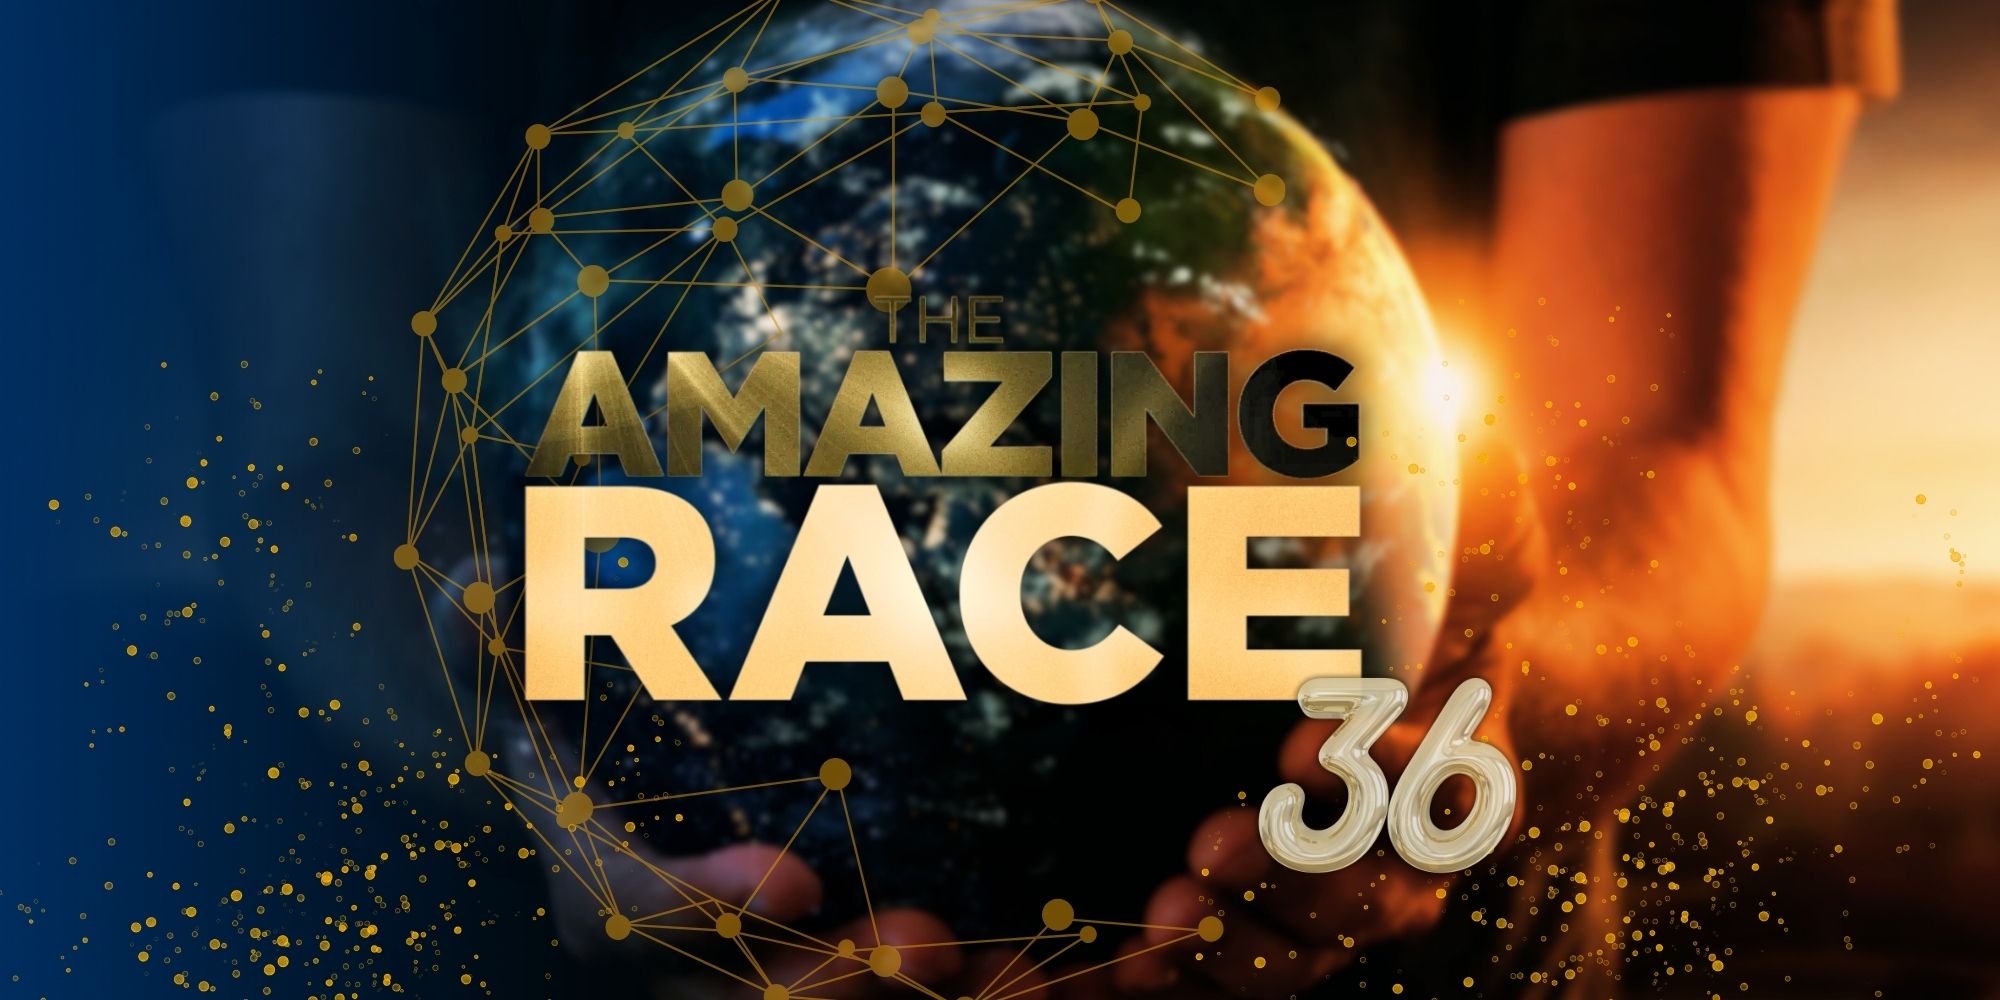 The Amazing Race Season 36 promo image